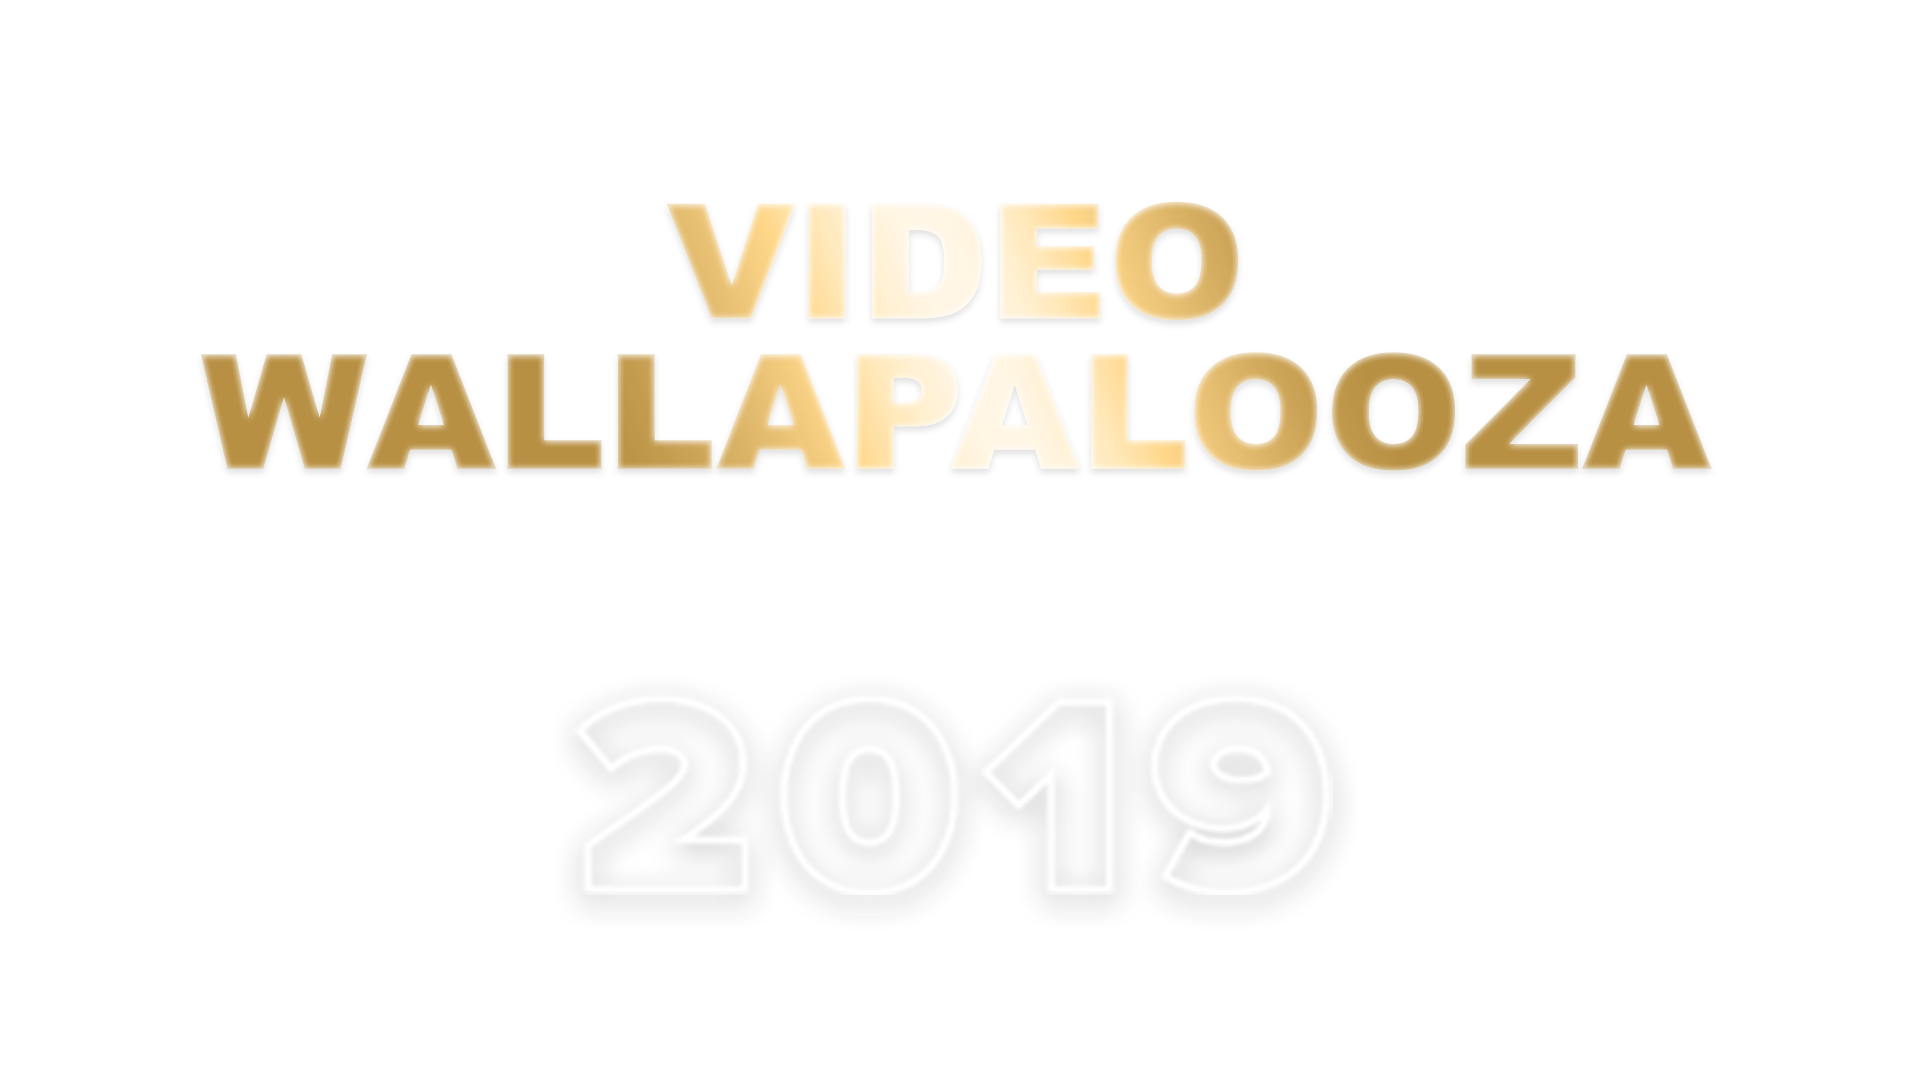 Leyard and Planar Present: Video Wallapalooza Roadshow 2019